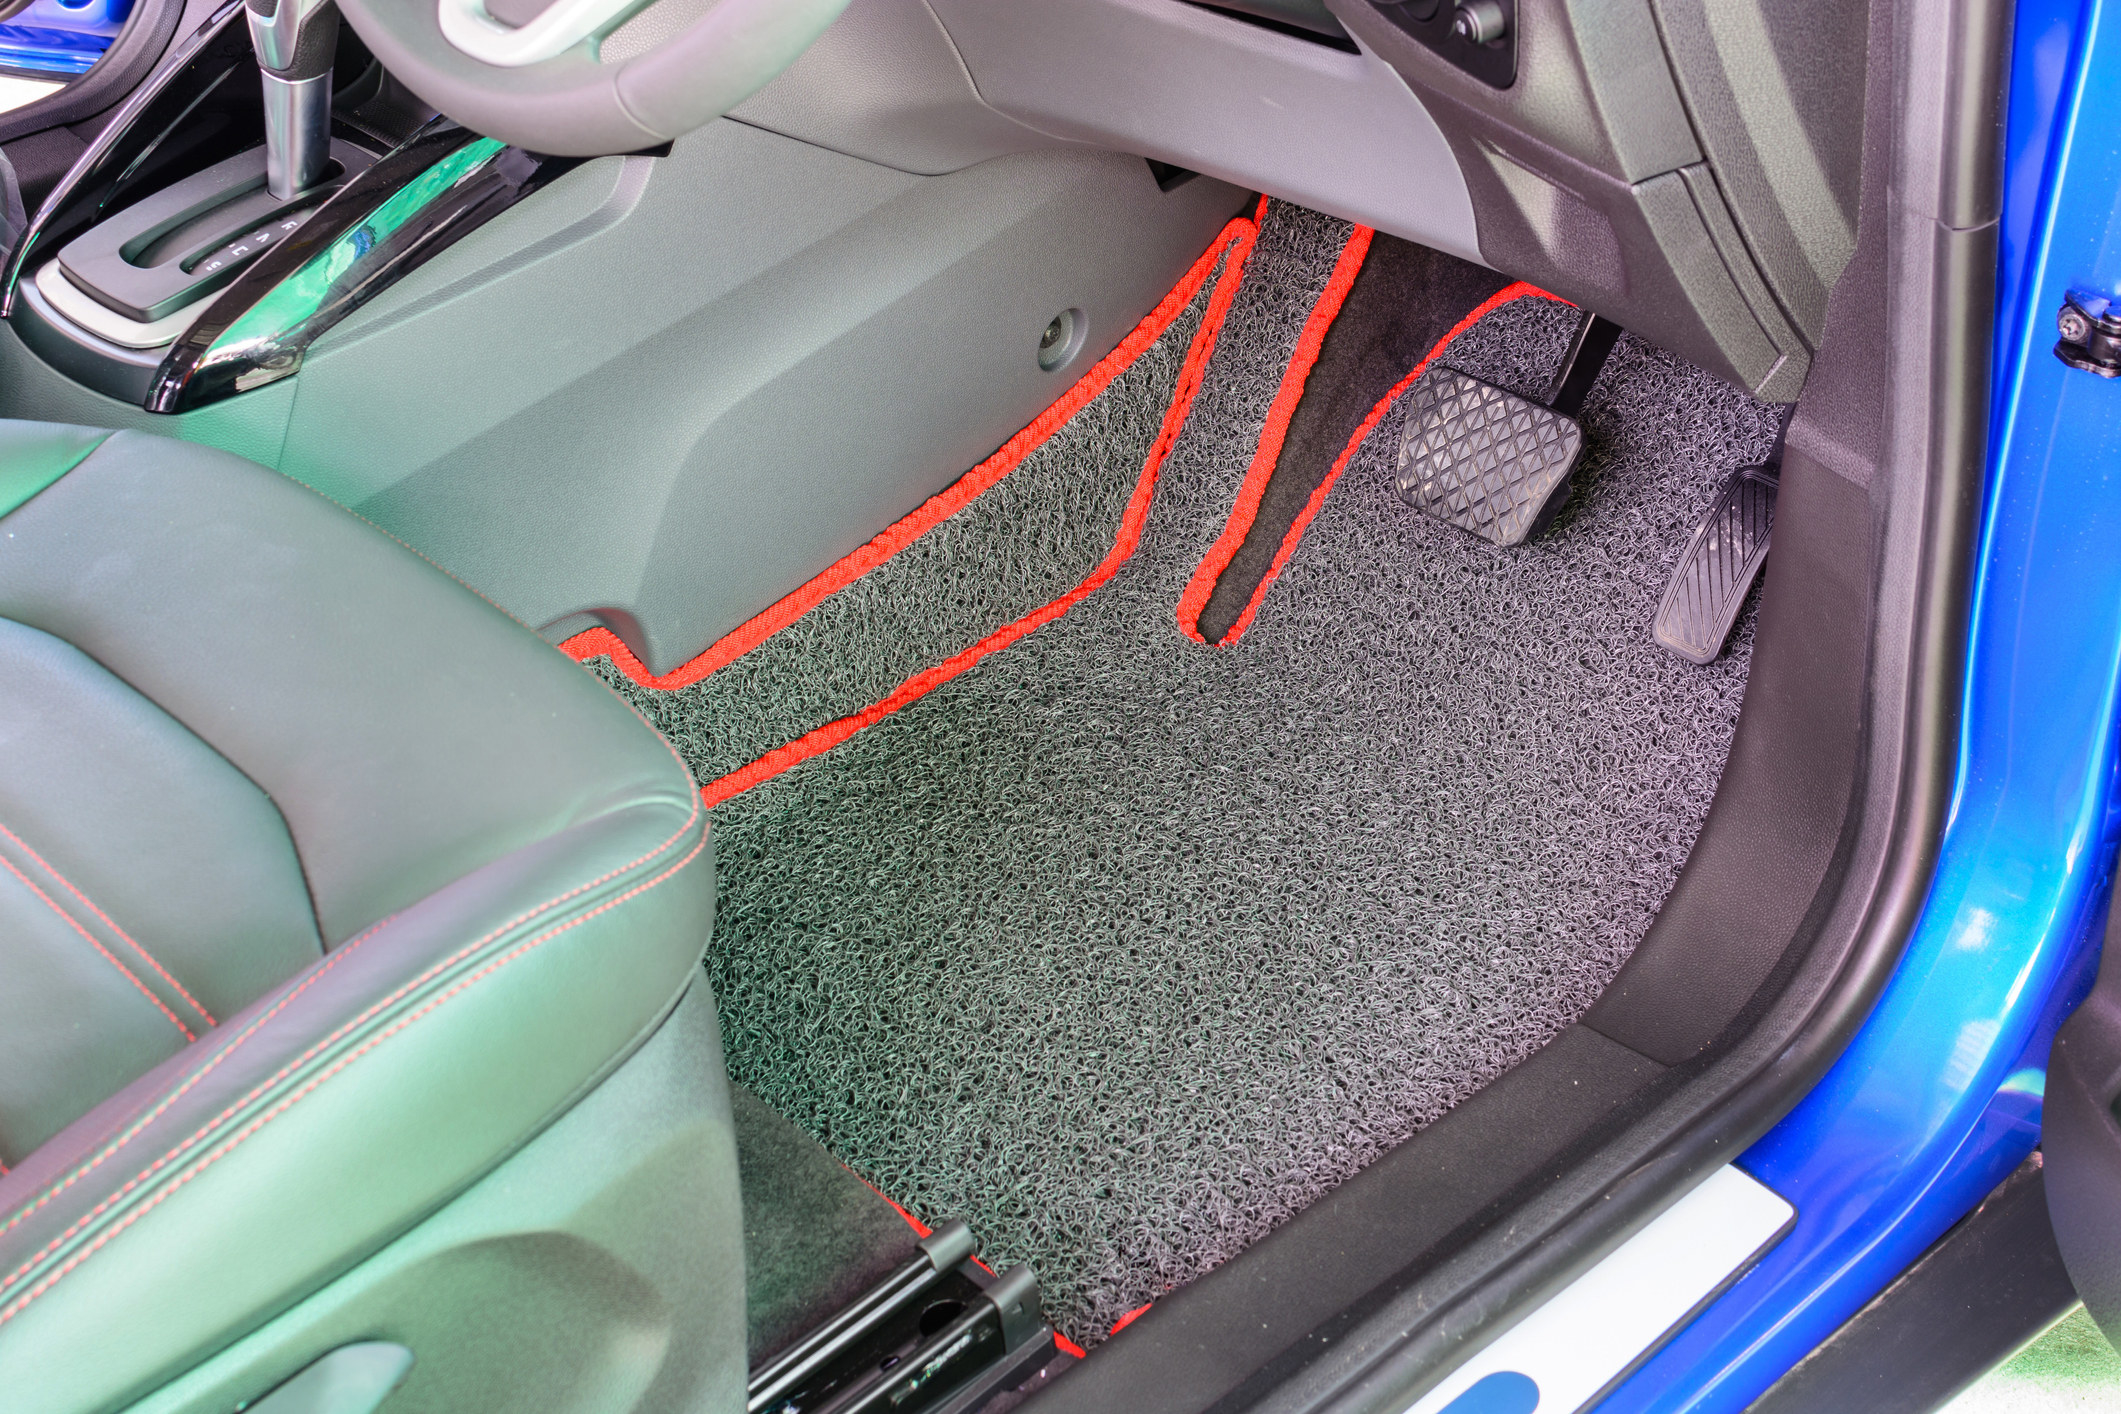 Clean, vinyl floor mats in a car.